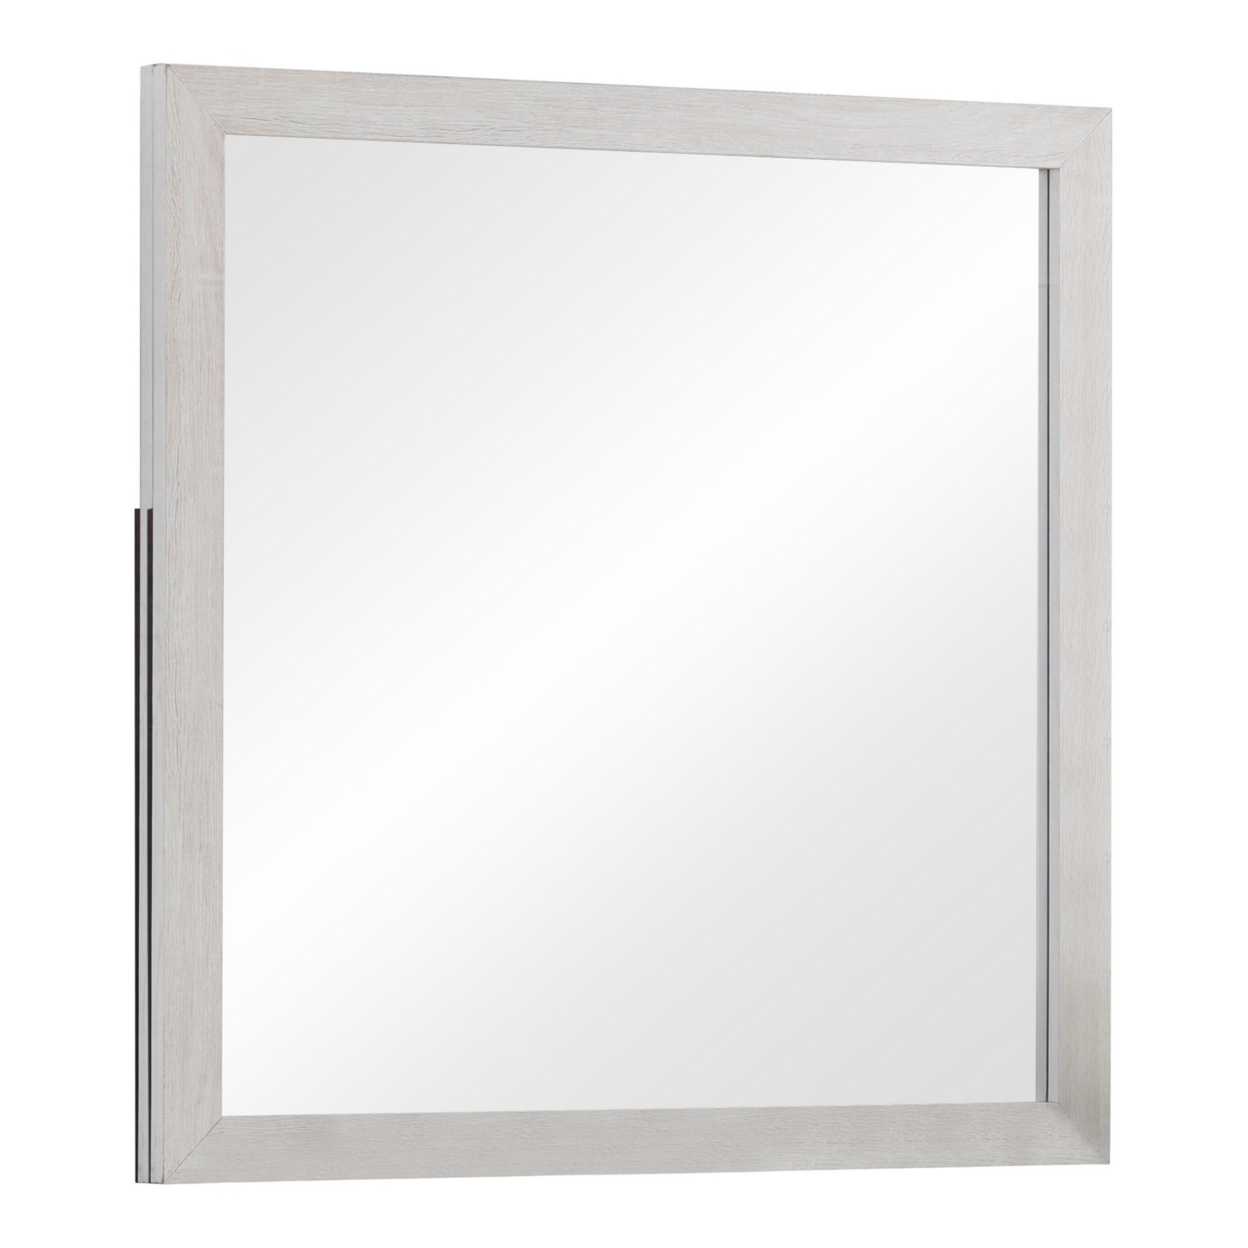 Mirror With Wooden Frame And Grain Details, White- Saltoro Sherpi